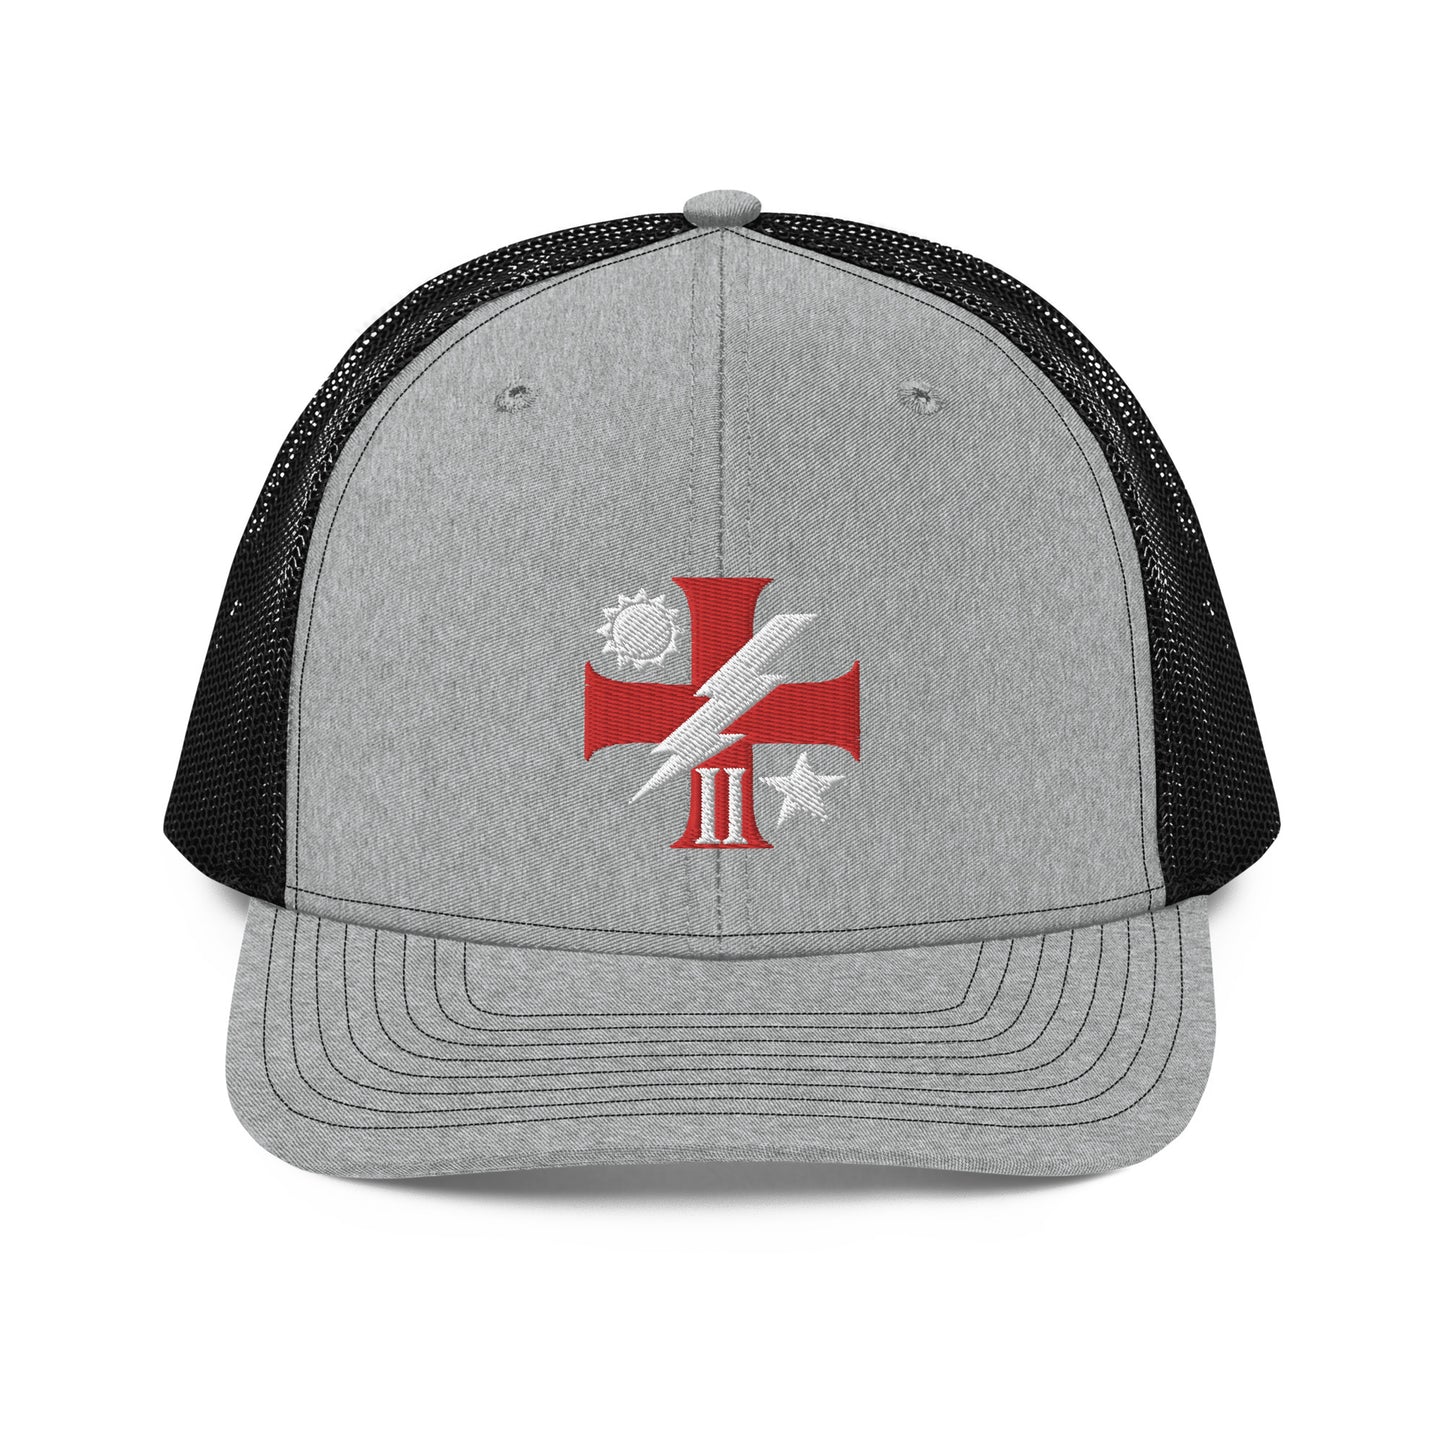 2d Battalion UMT Trucker Hat